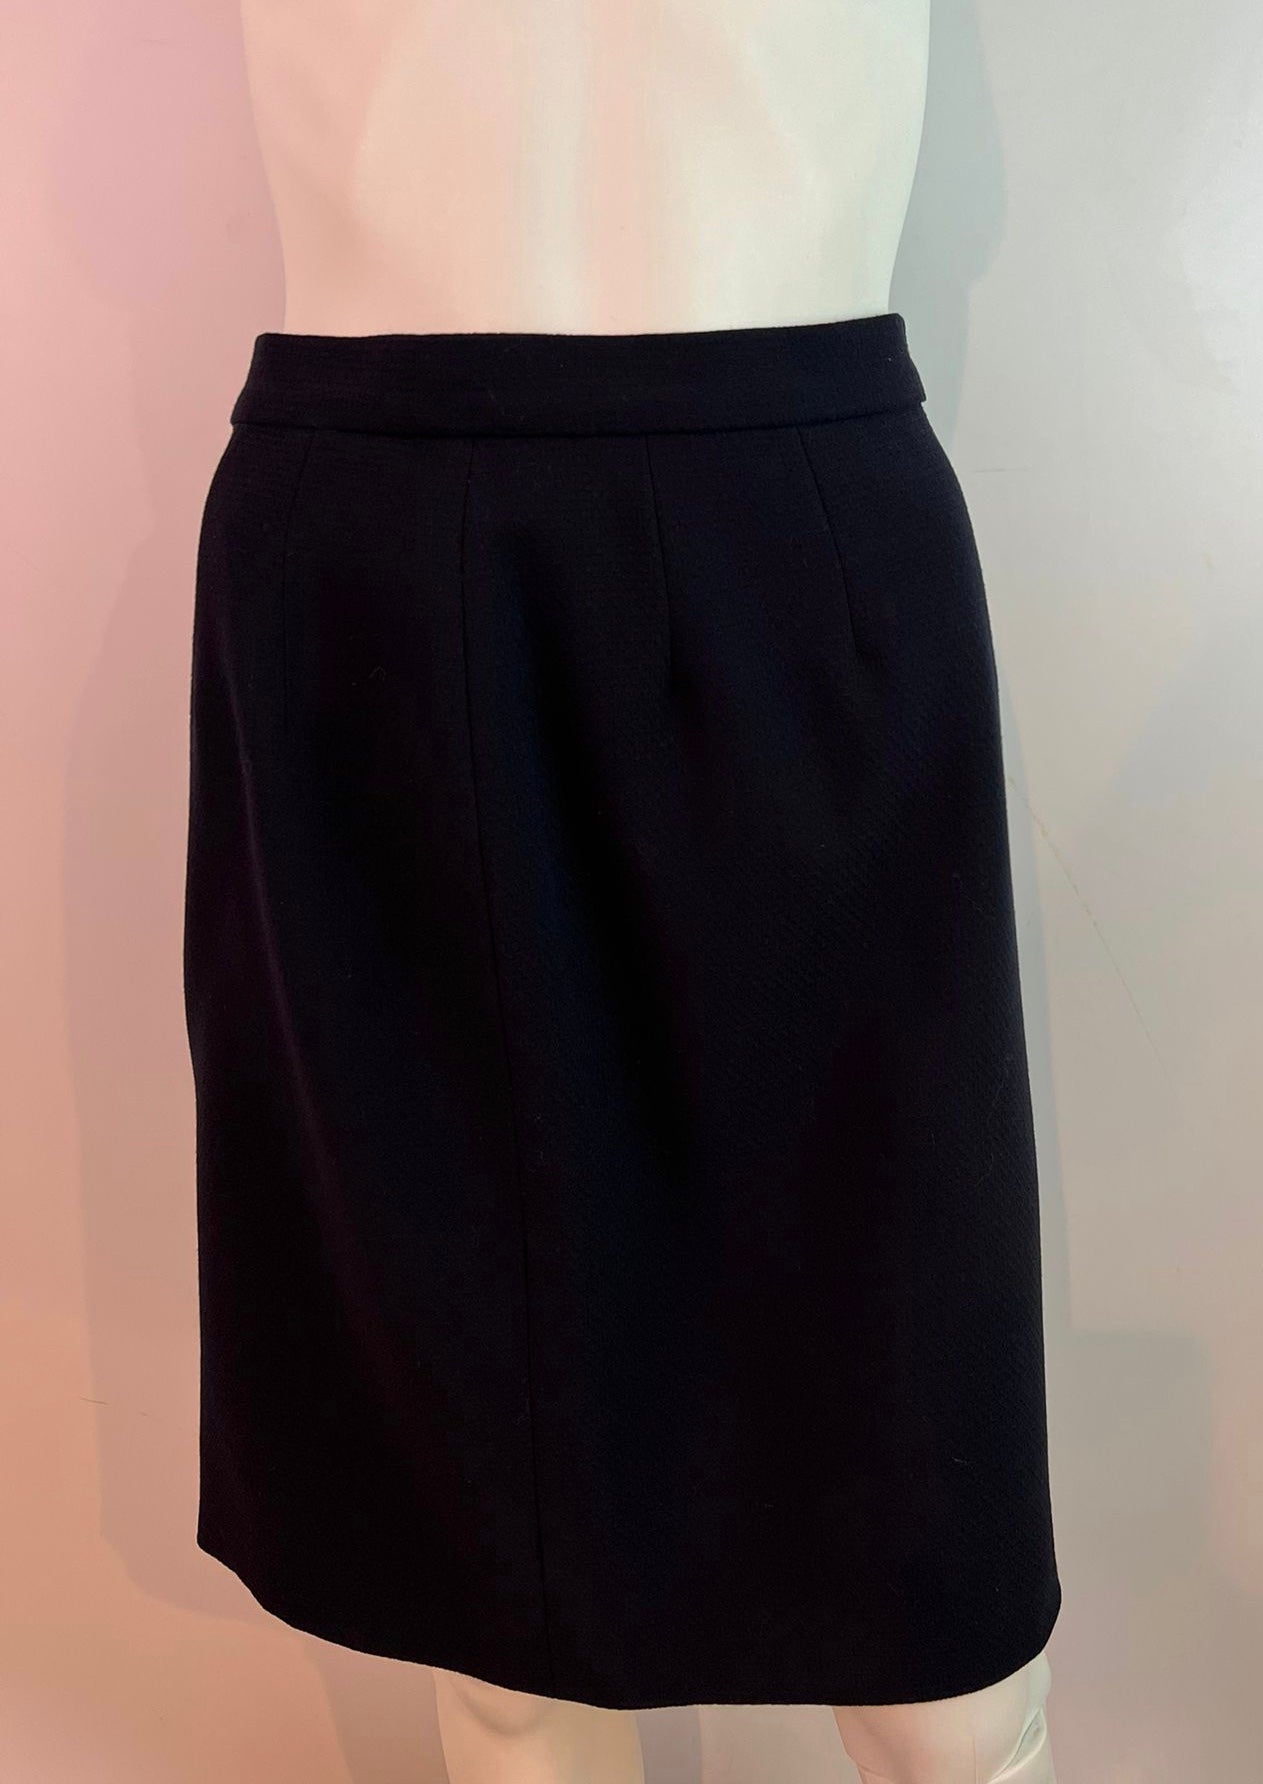 Vintage Chanel 1980’s Collection 15 Black Linen Skirt Suit US 2/4